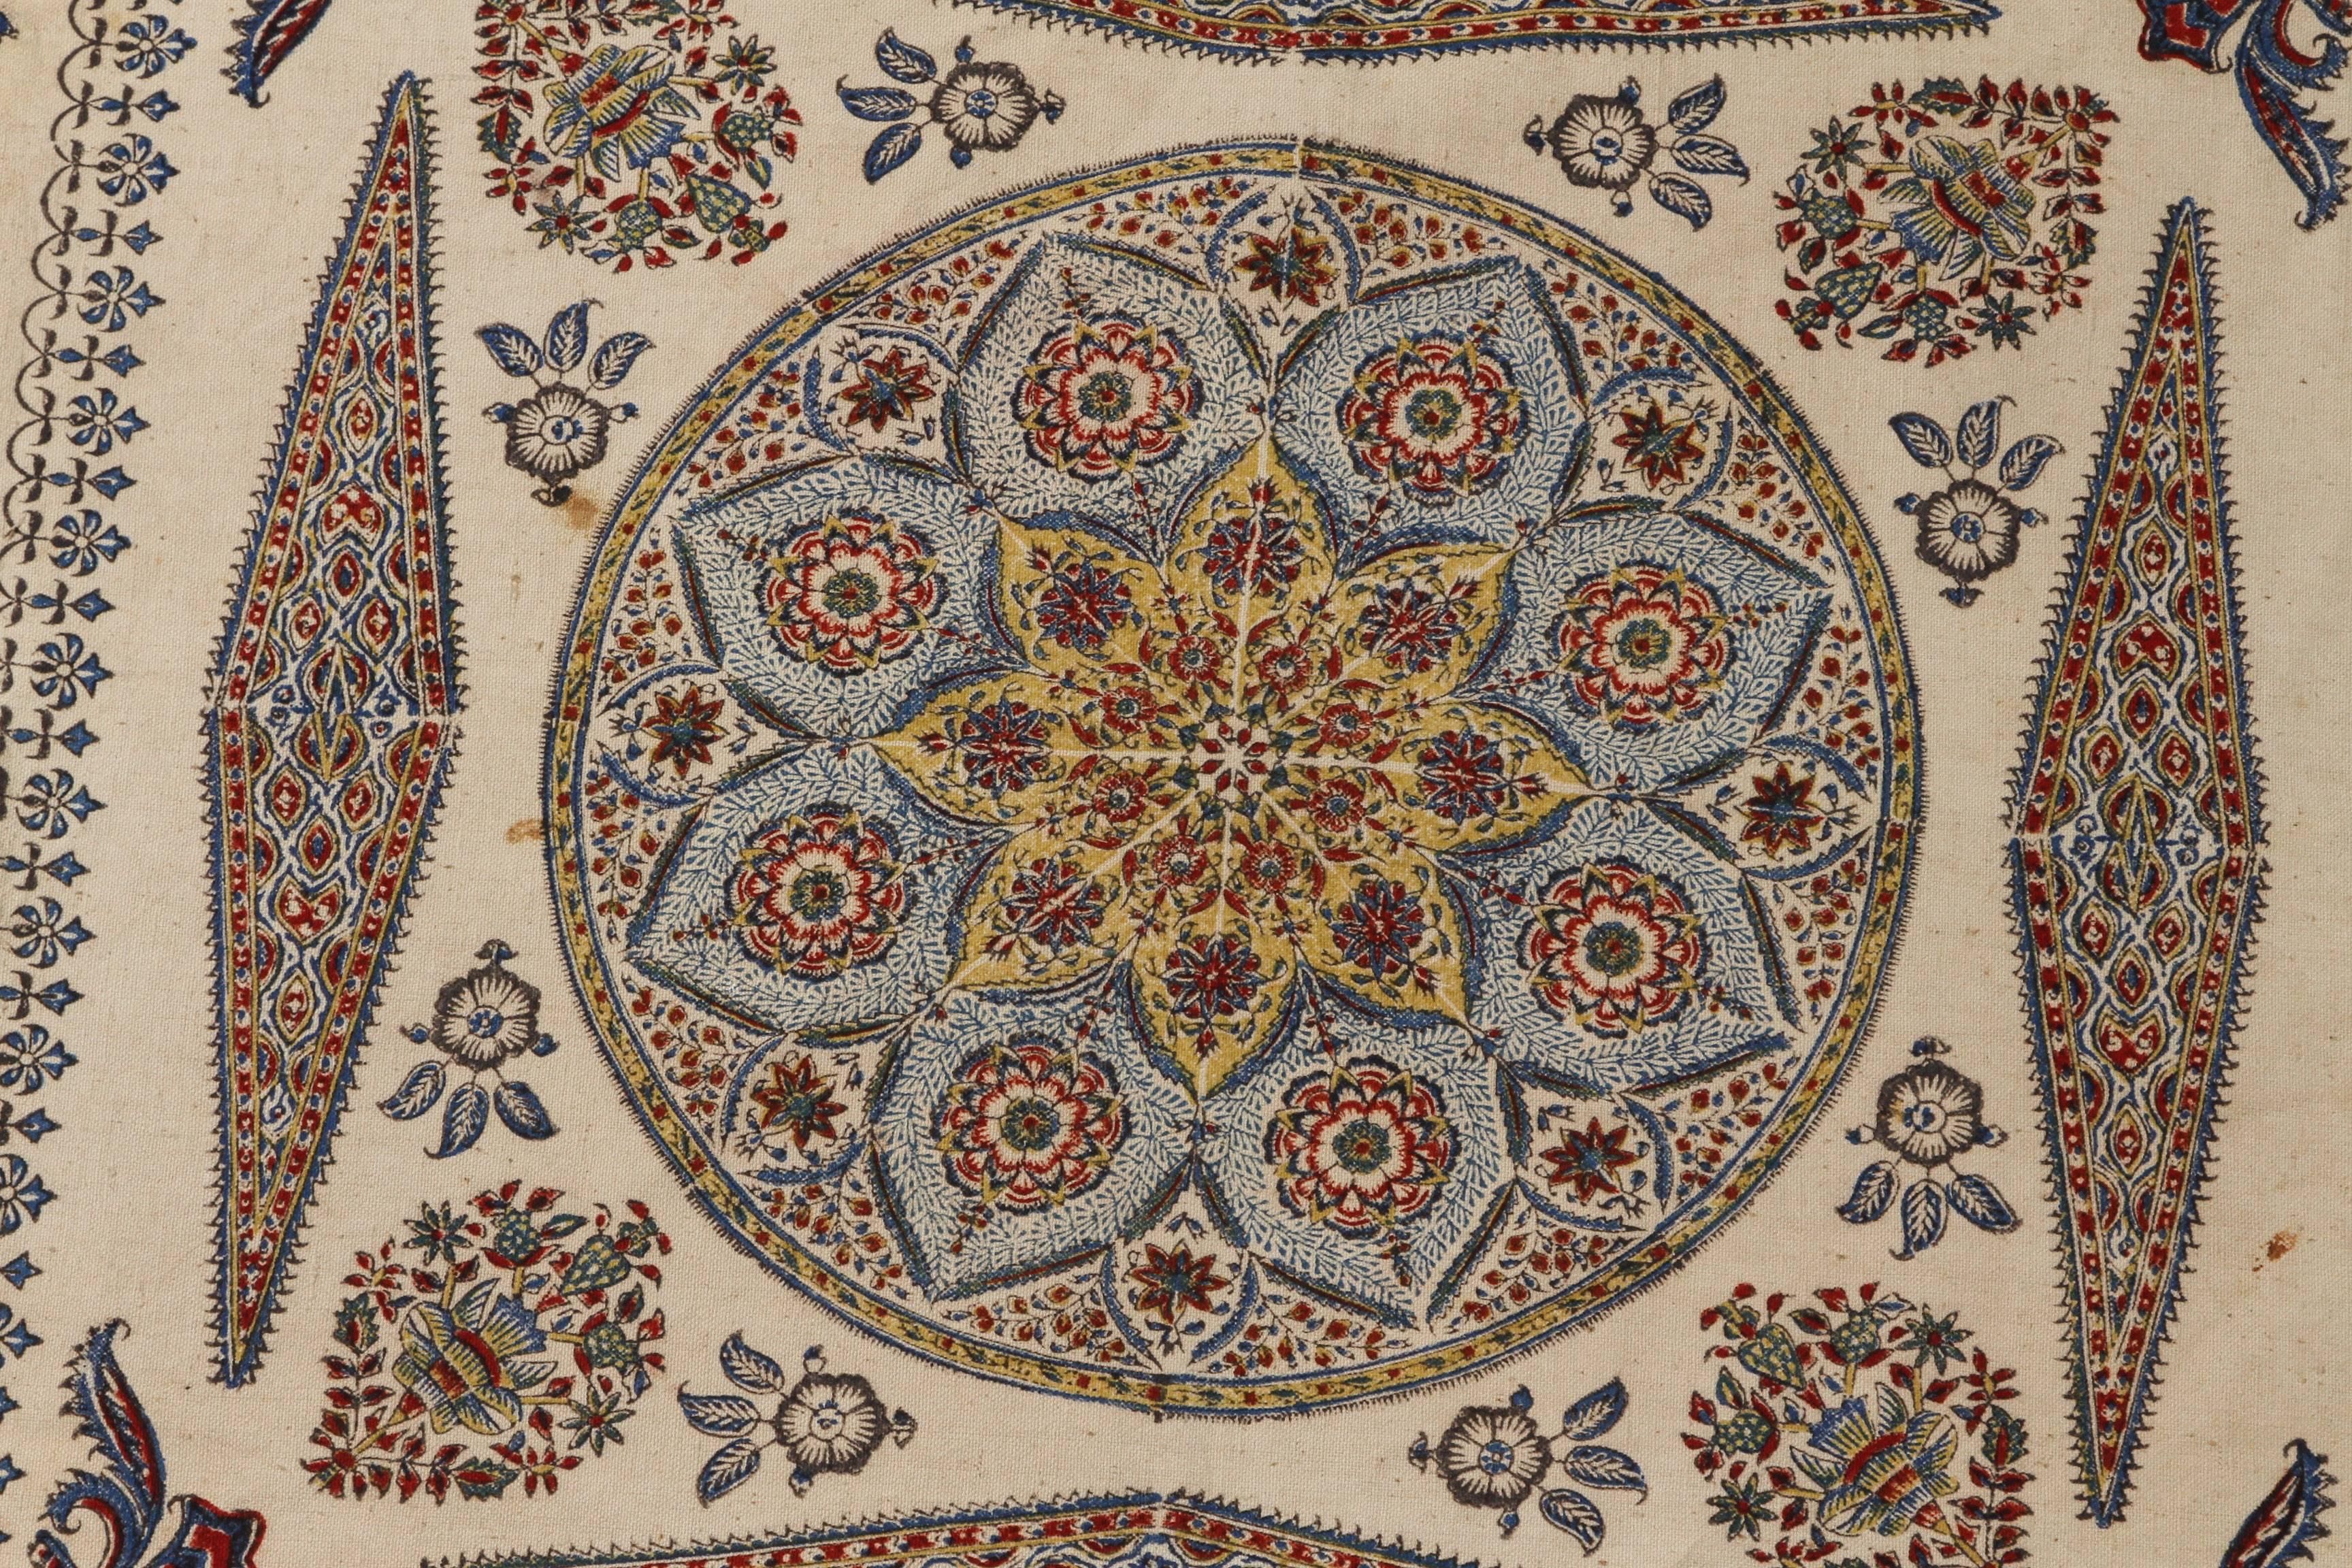 20th Century Persian Paisley Woodblock Printed Textile